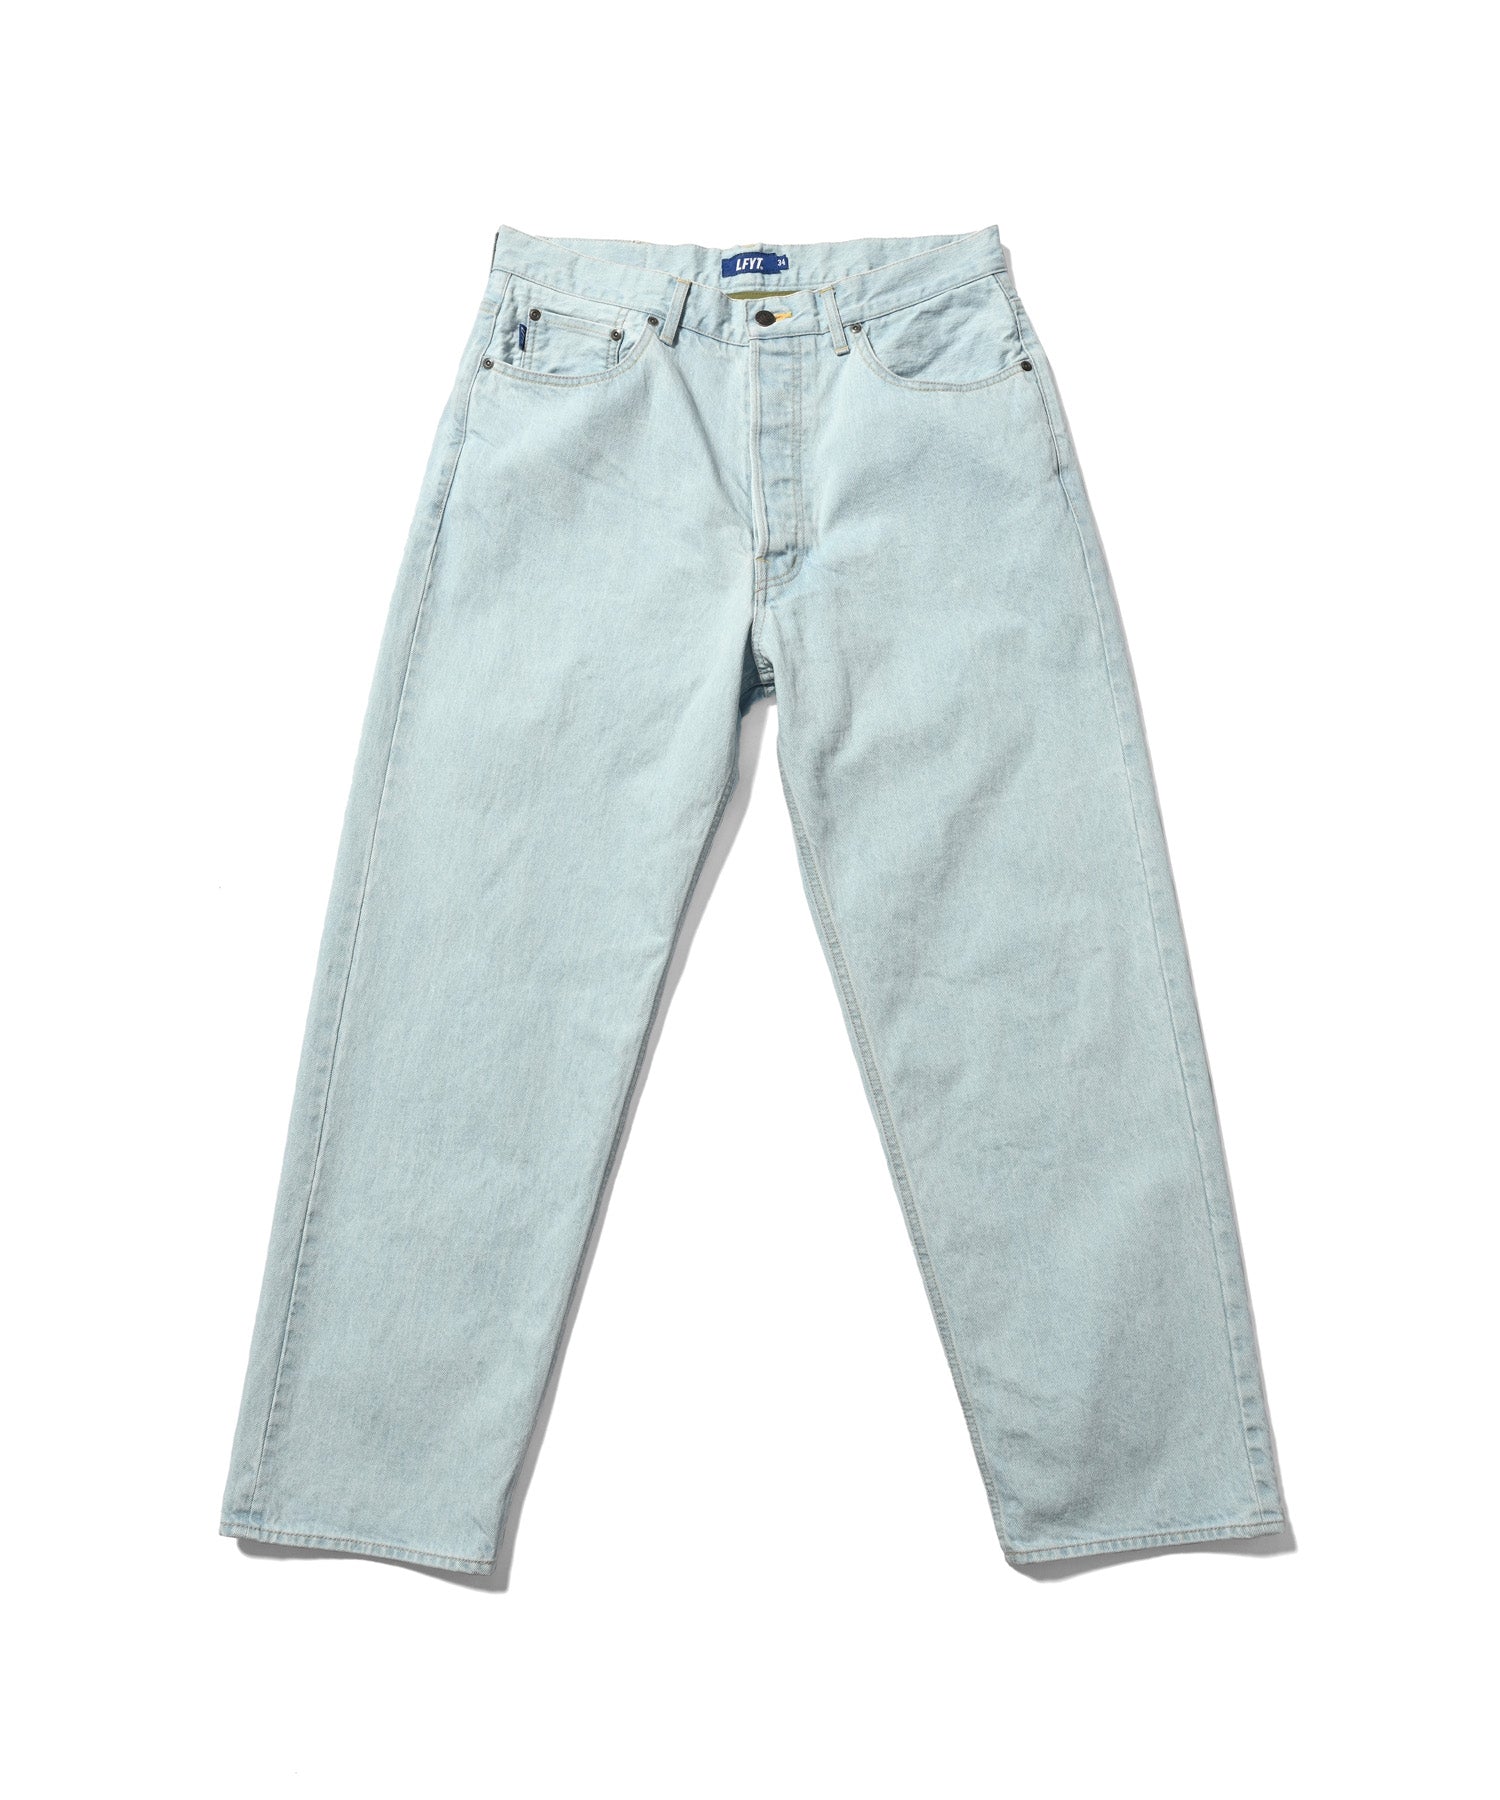 [m.a+] 21AW 5 Pocket Medium Fit Pants 美品パンツ